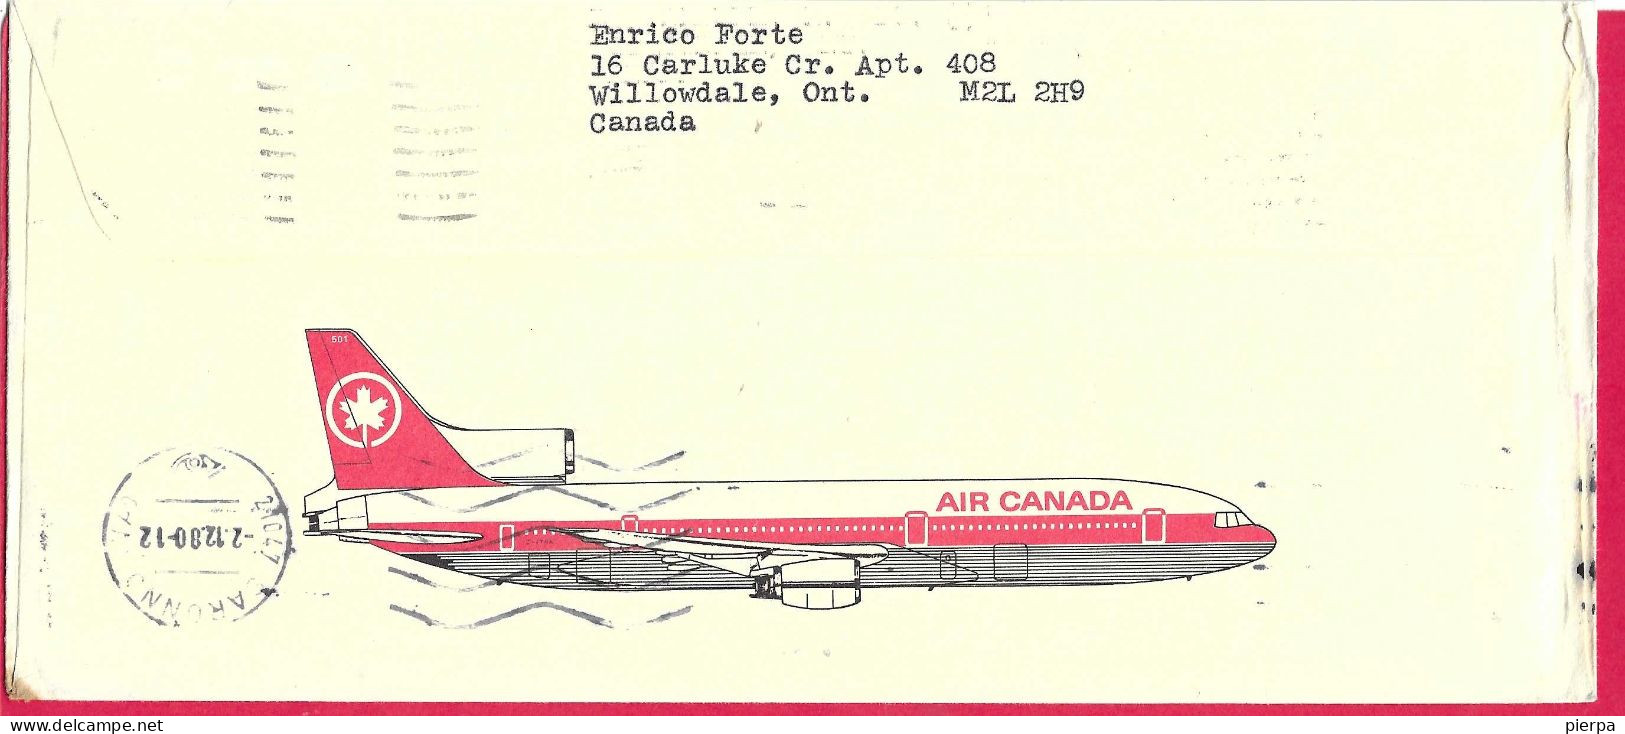 CANADA - BUSTA INTESTATA AIR CANADA - ANNULLO " POSTES CANADA POST*24.XI. 1980" SU BUSTA COMMERCIALE - Poste Aérienne